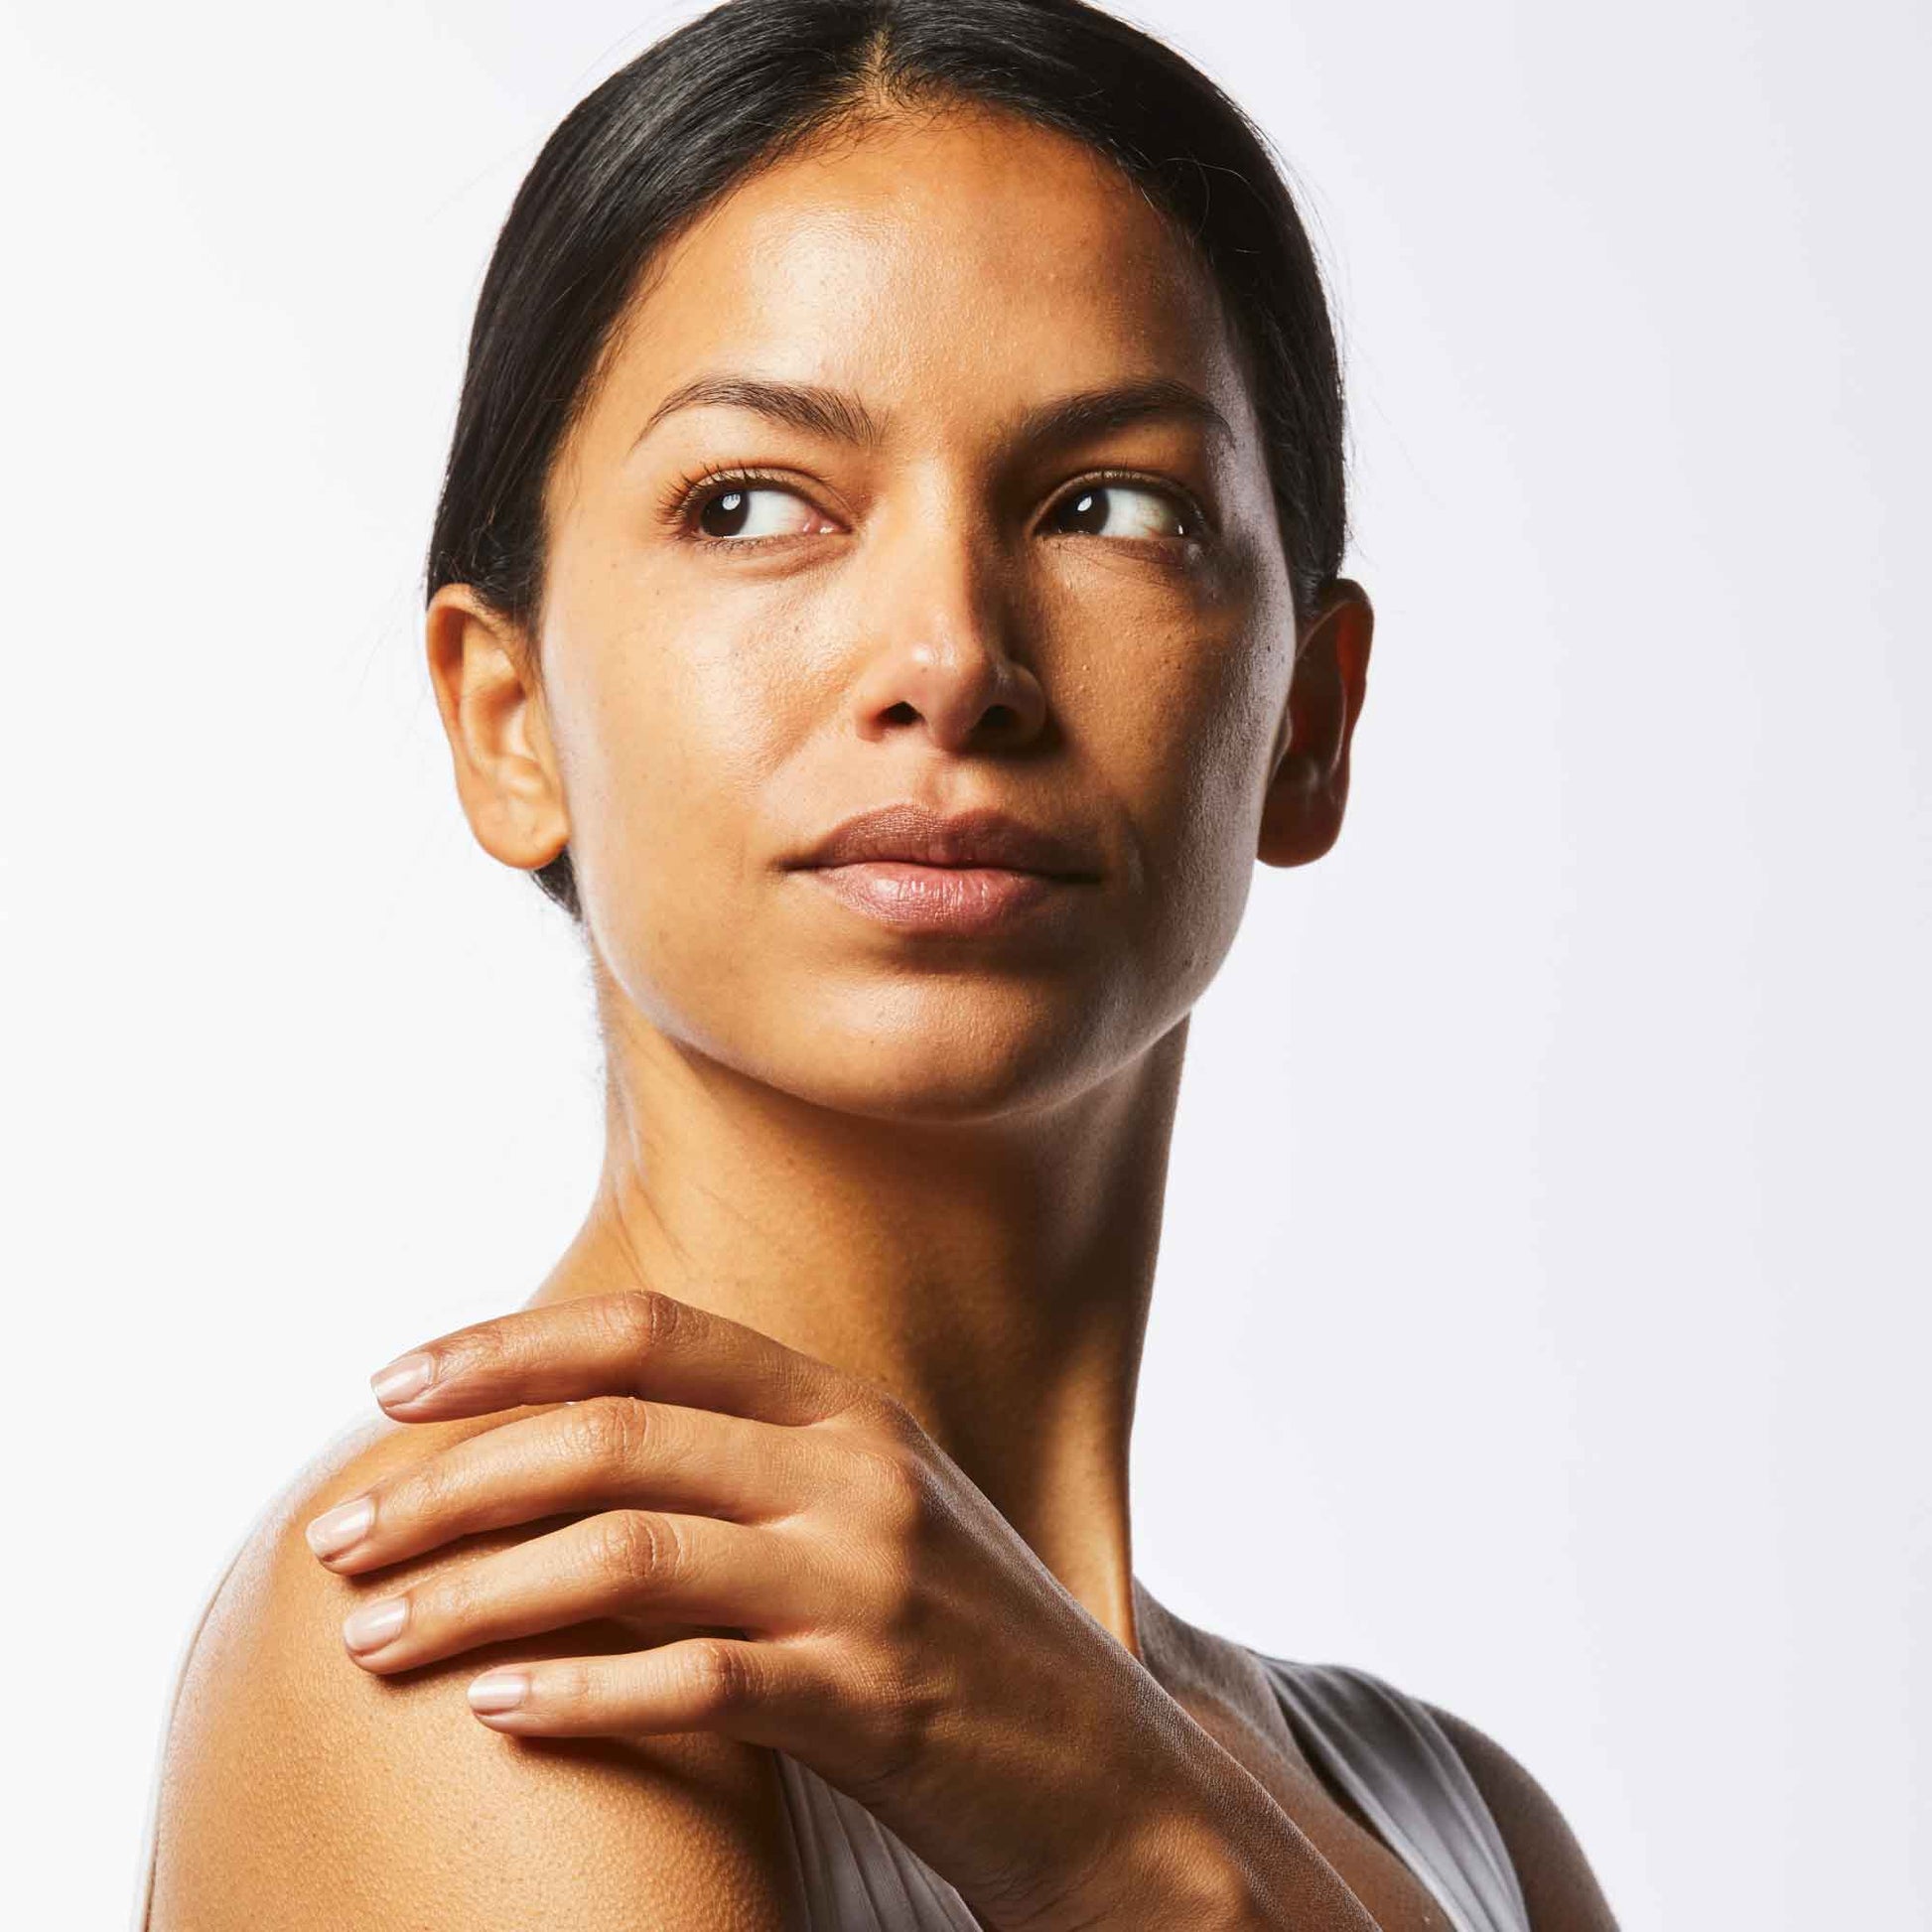 Woman posing with glowing skin, touching her shoulder